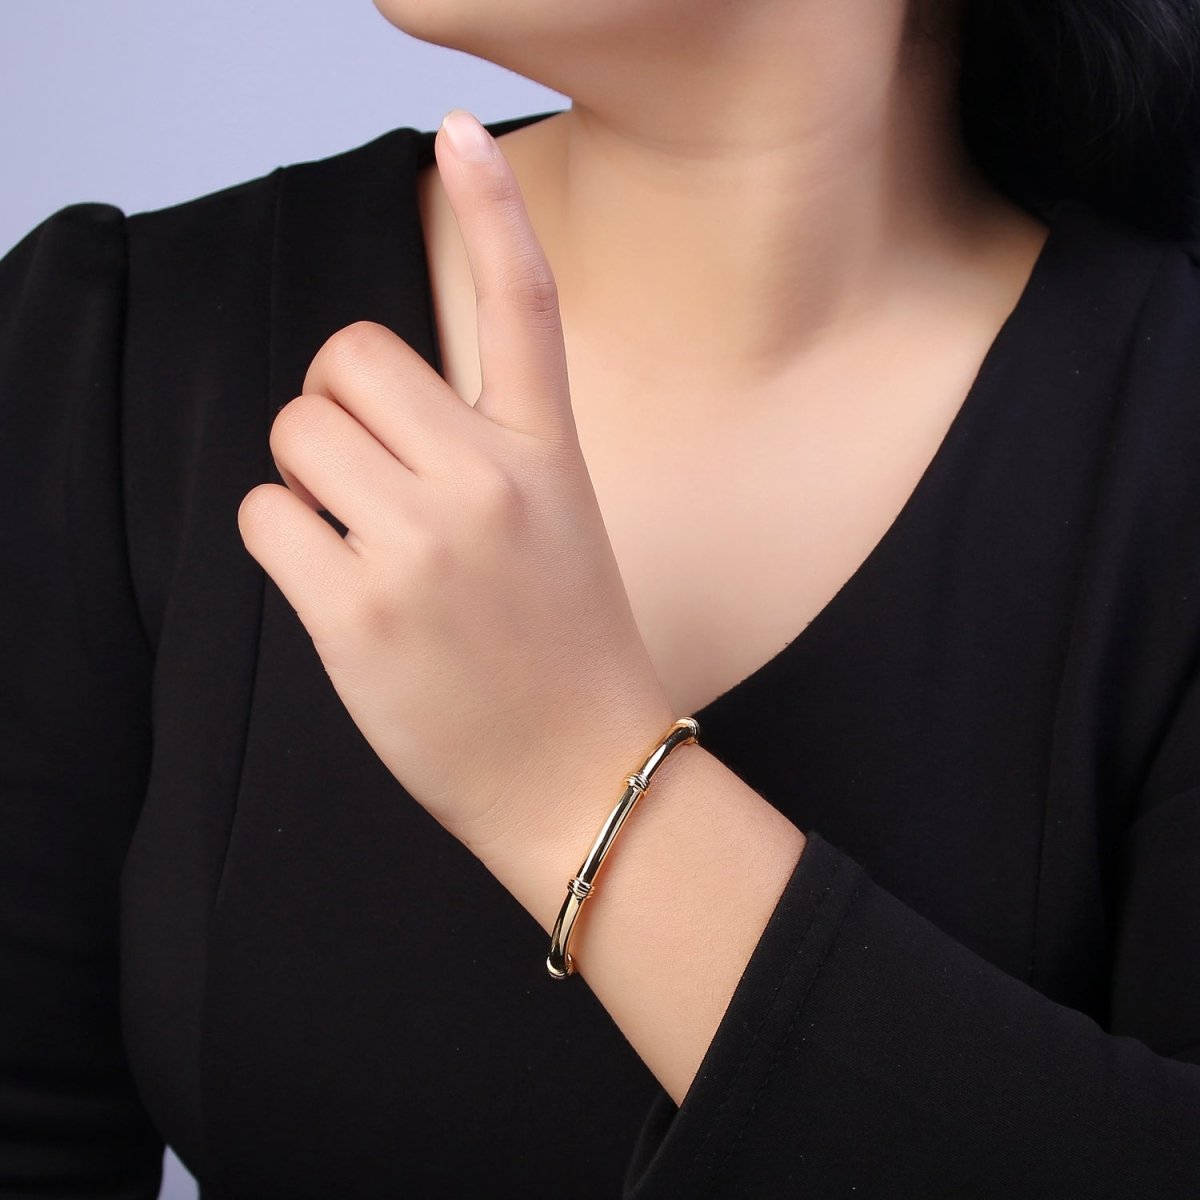 24K Gold Filled Knot Bangle Bracelet, Minimalist Small Knots Stacking Cuff Bracelet | WA-661 Clearance Pricing - DLUXCA